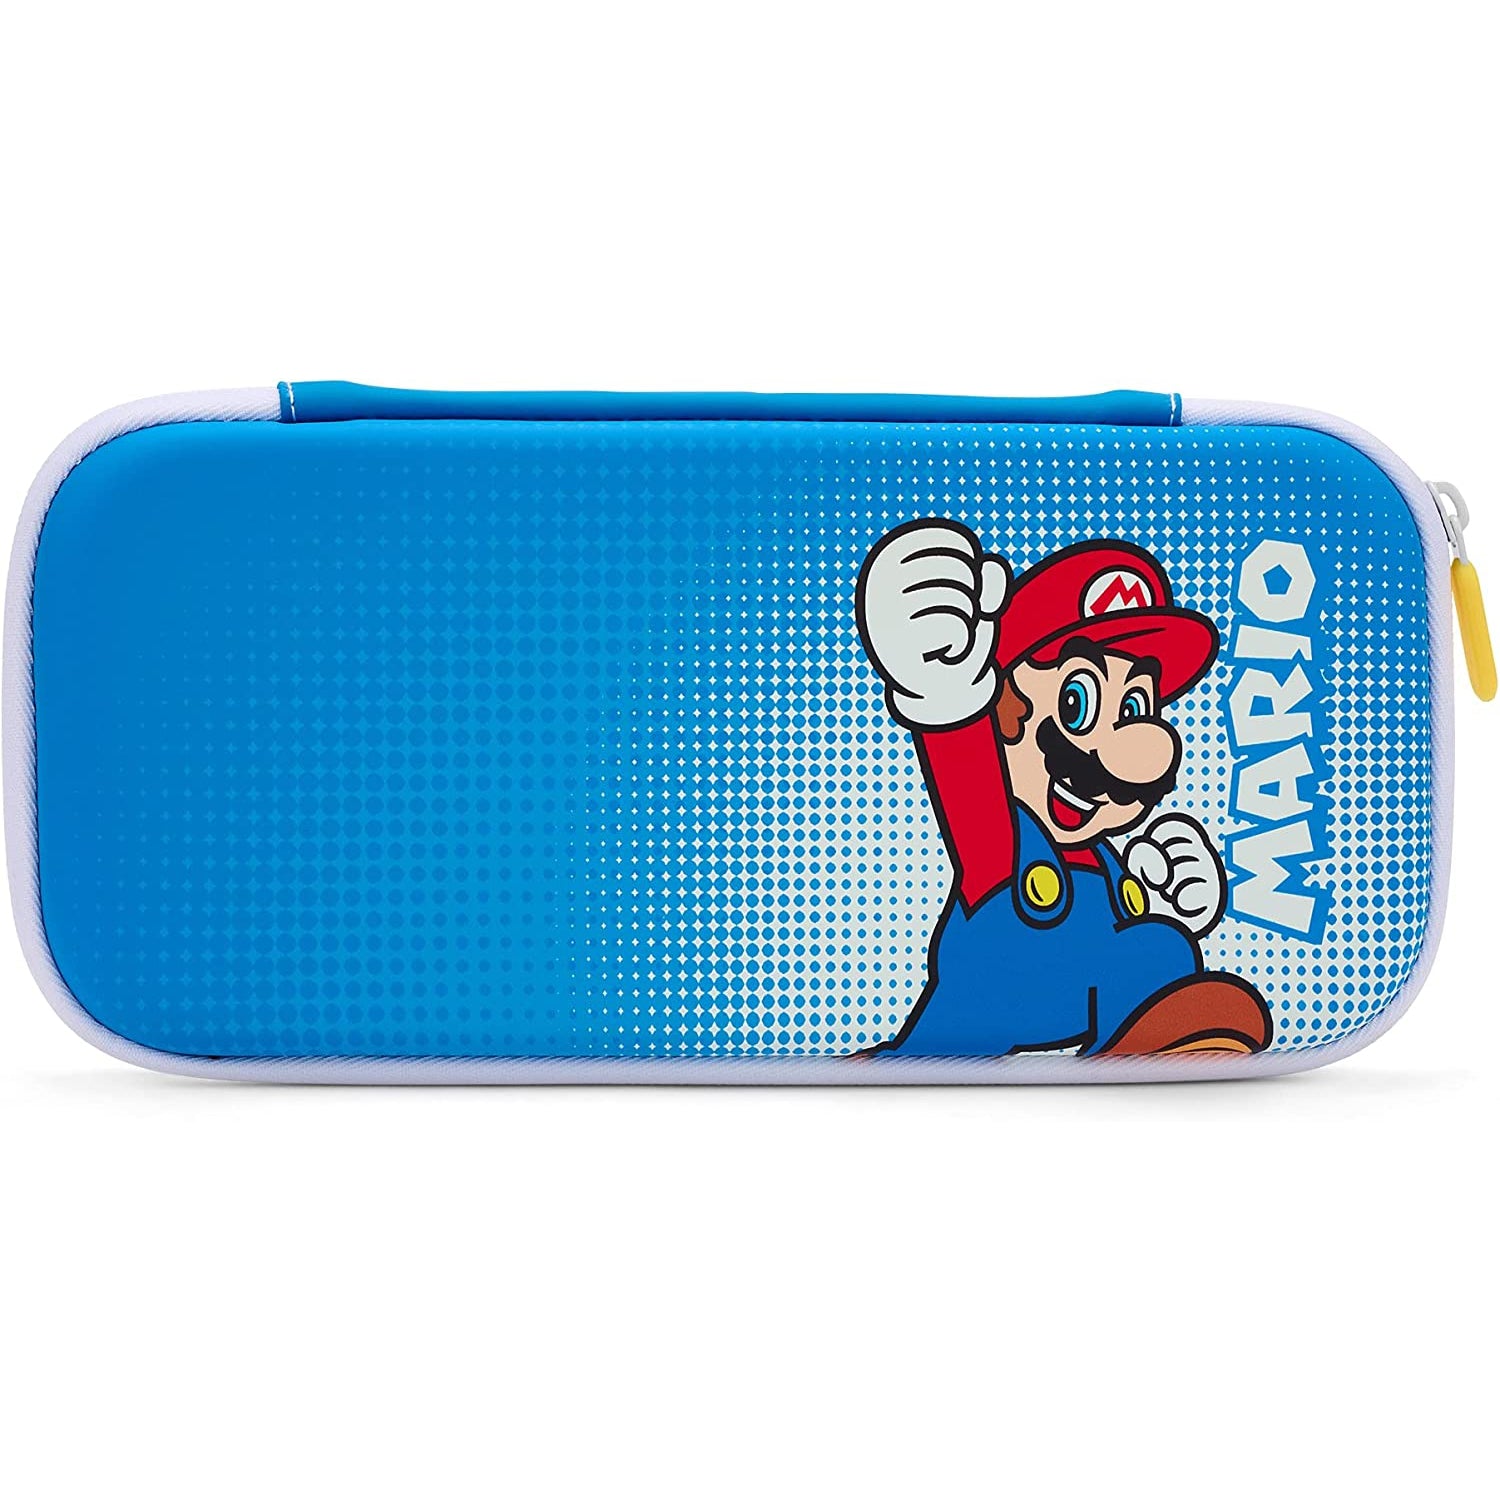 PowerA Stealth Travel Case for Nintendo Switch - Blue Mario Pop